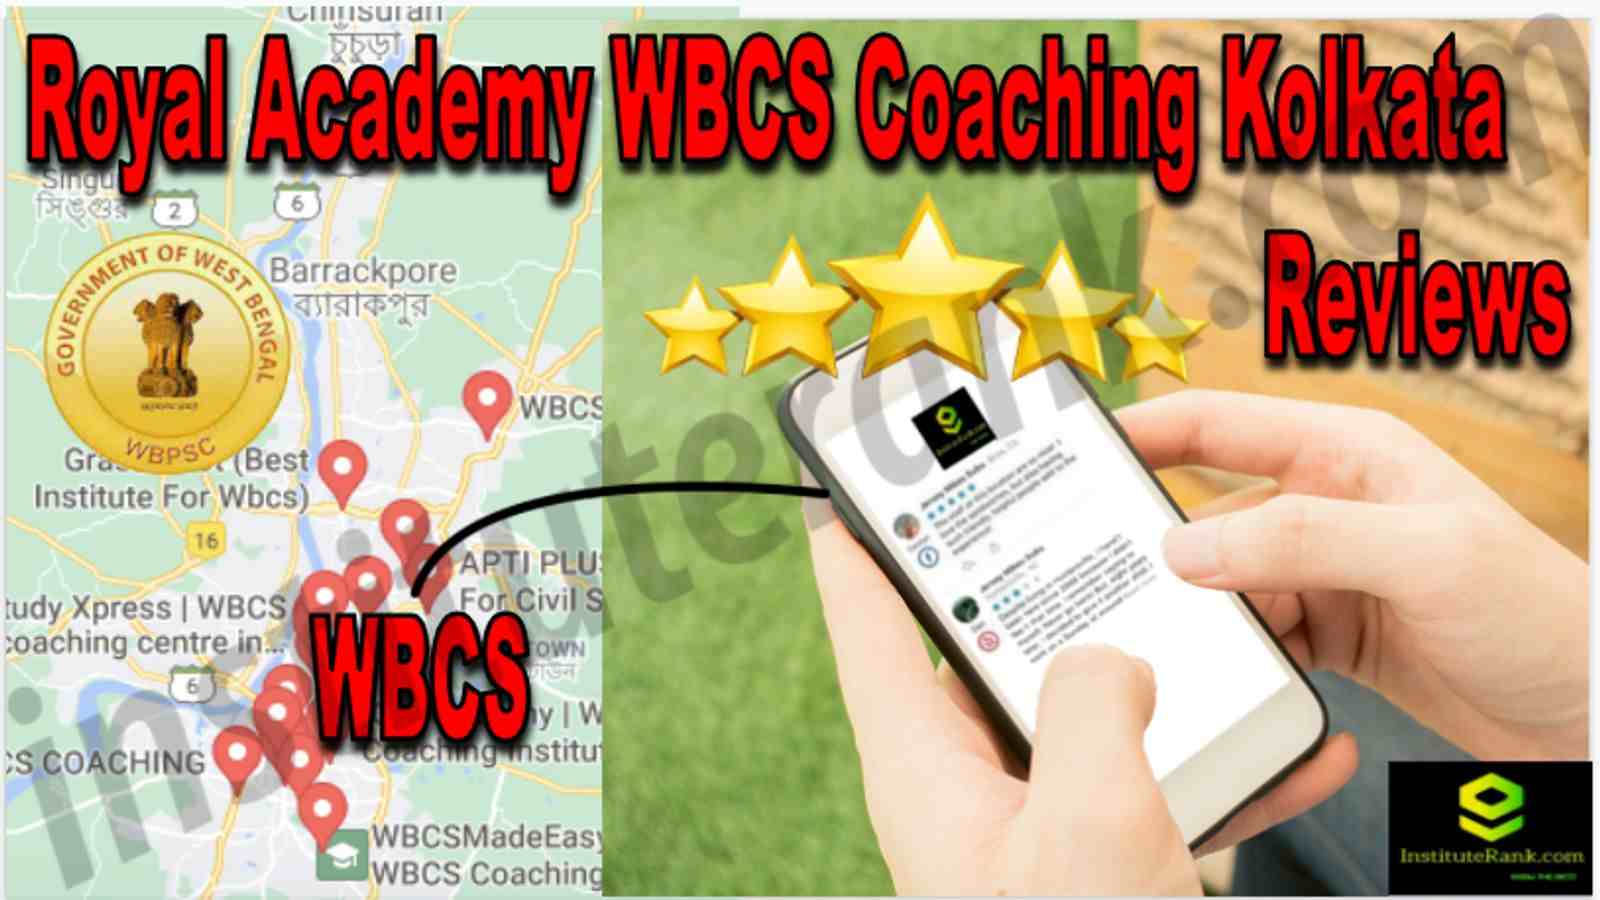 Royal Academy WBSC Coaching Kolkata reviews